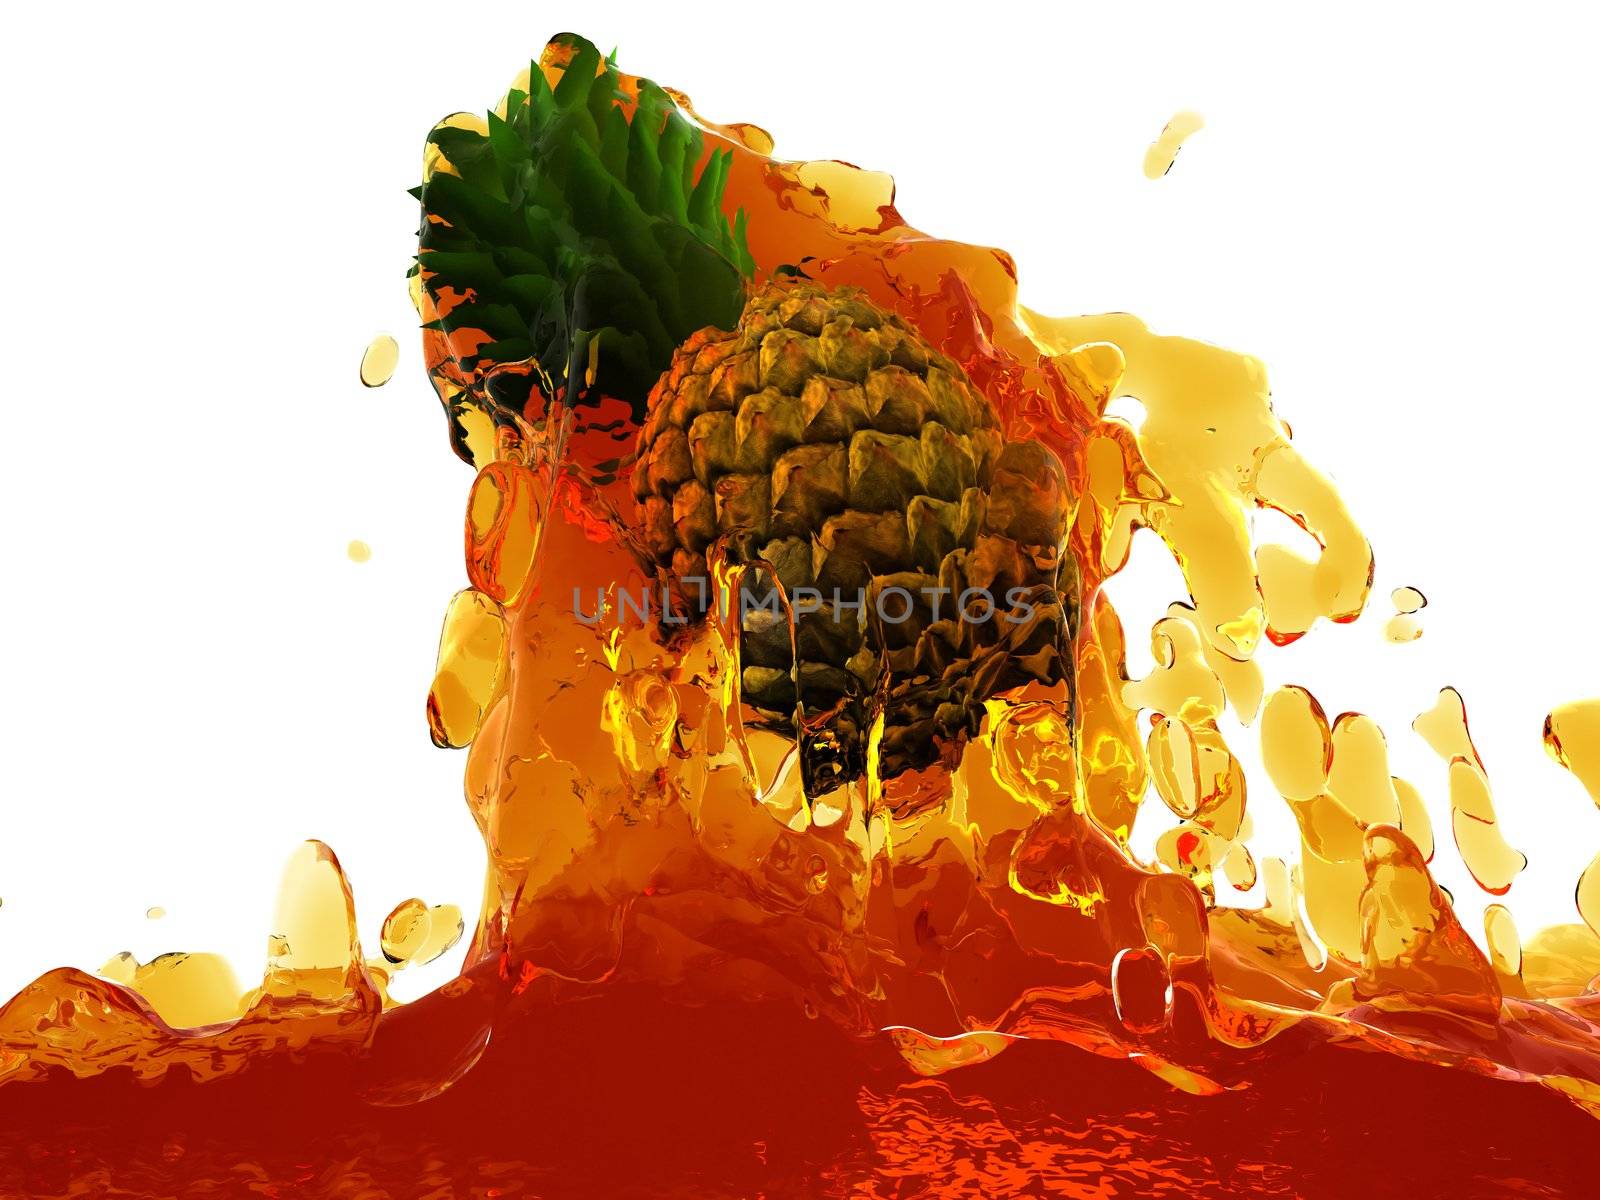 Pineapple in juice by videodoctor